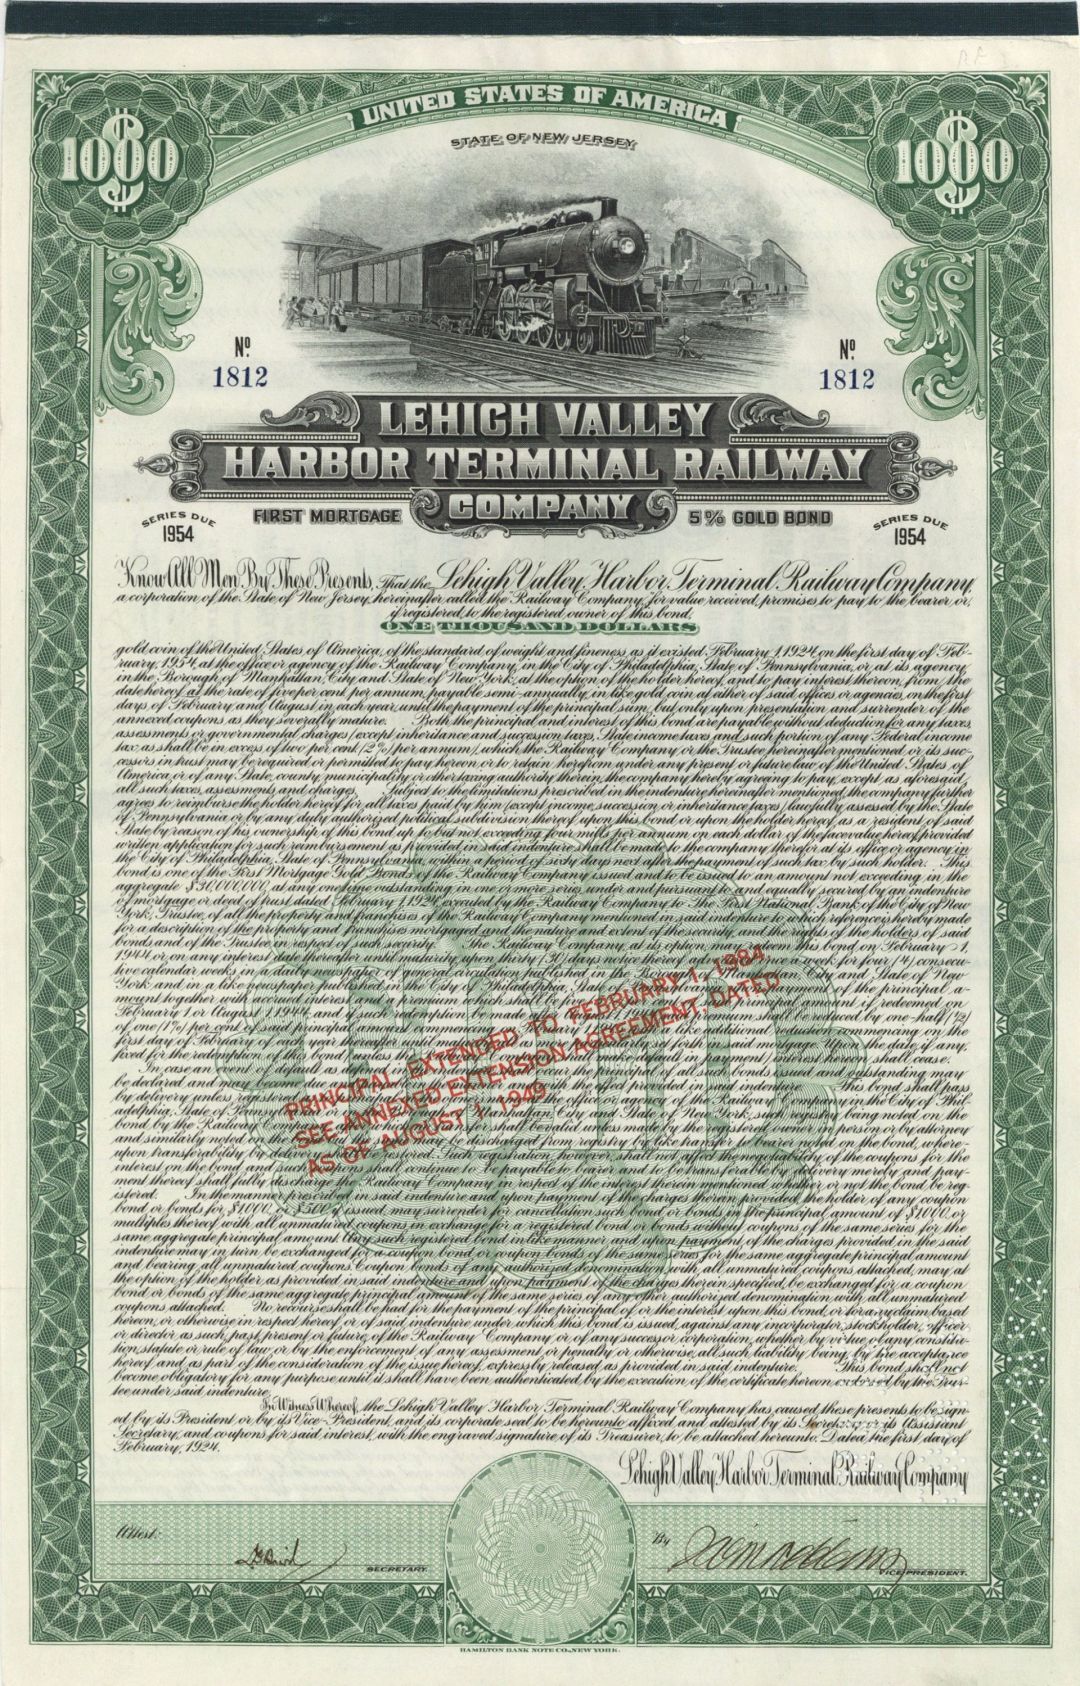 Lehigh Valley Harbor Terminal Railway Co. - 1924 dated $1,000 or $500 Bond